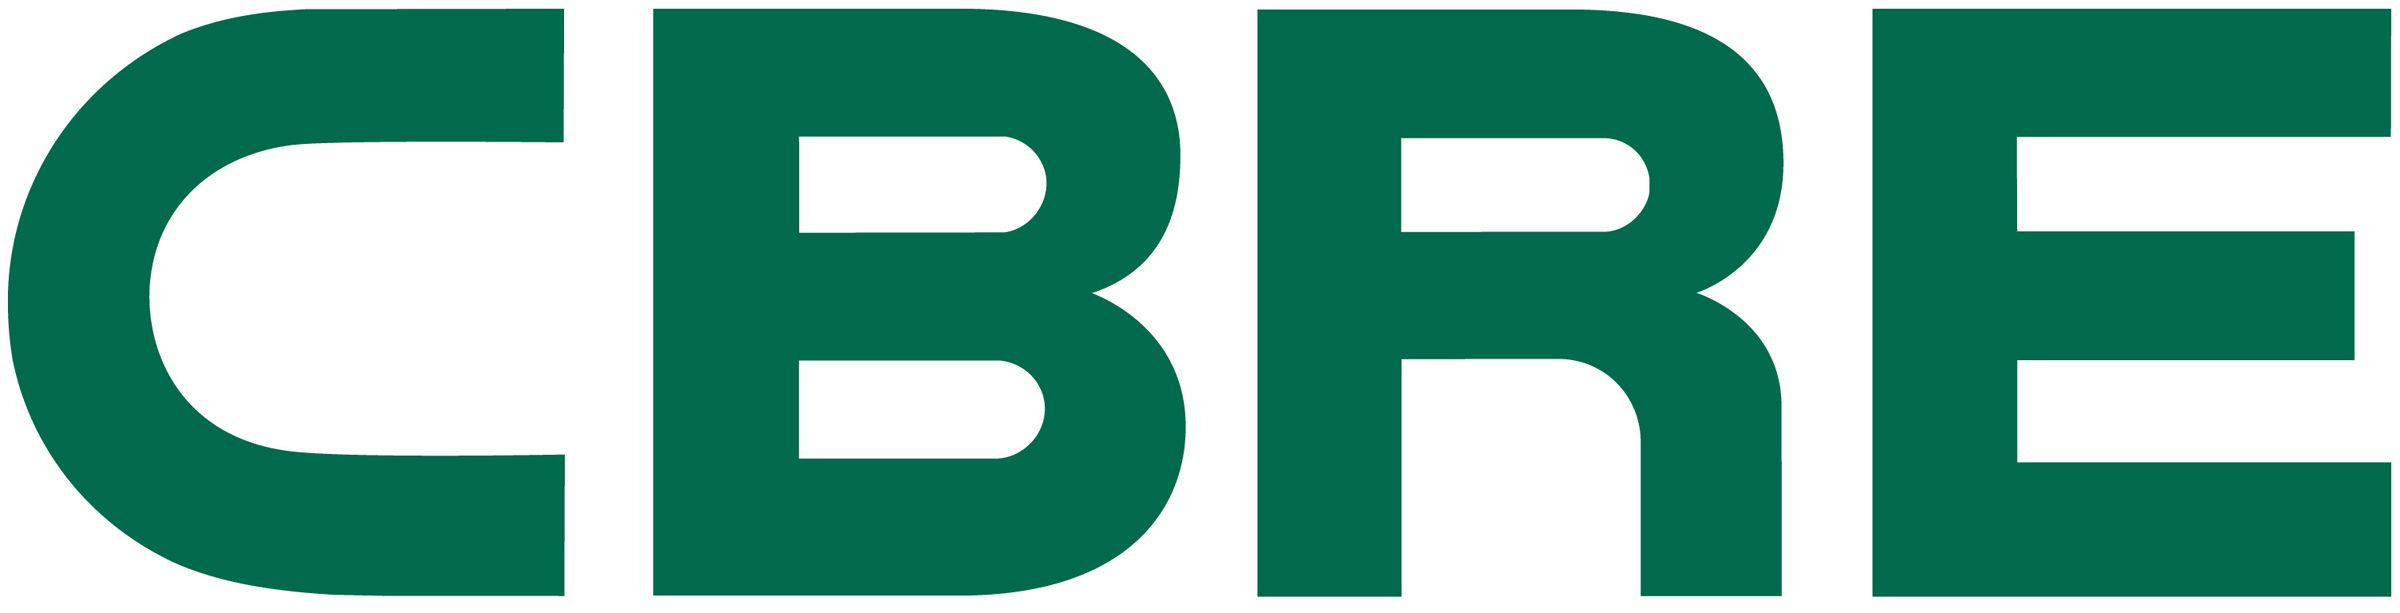 CBRE_Dan_Blackwell Logo